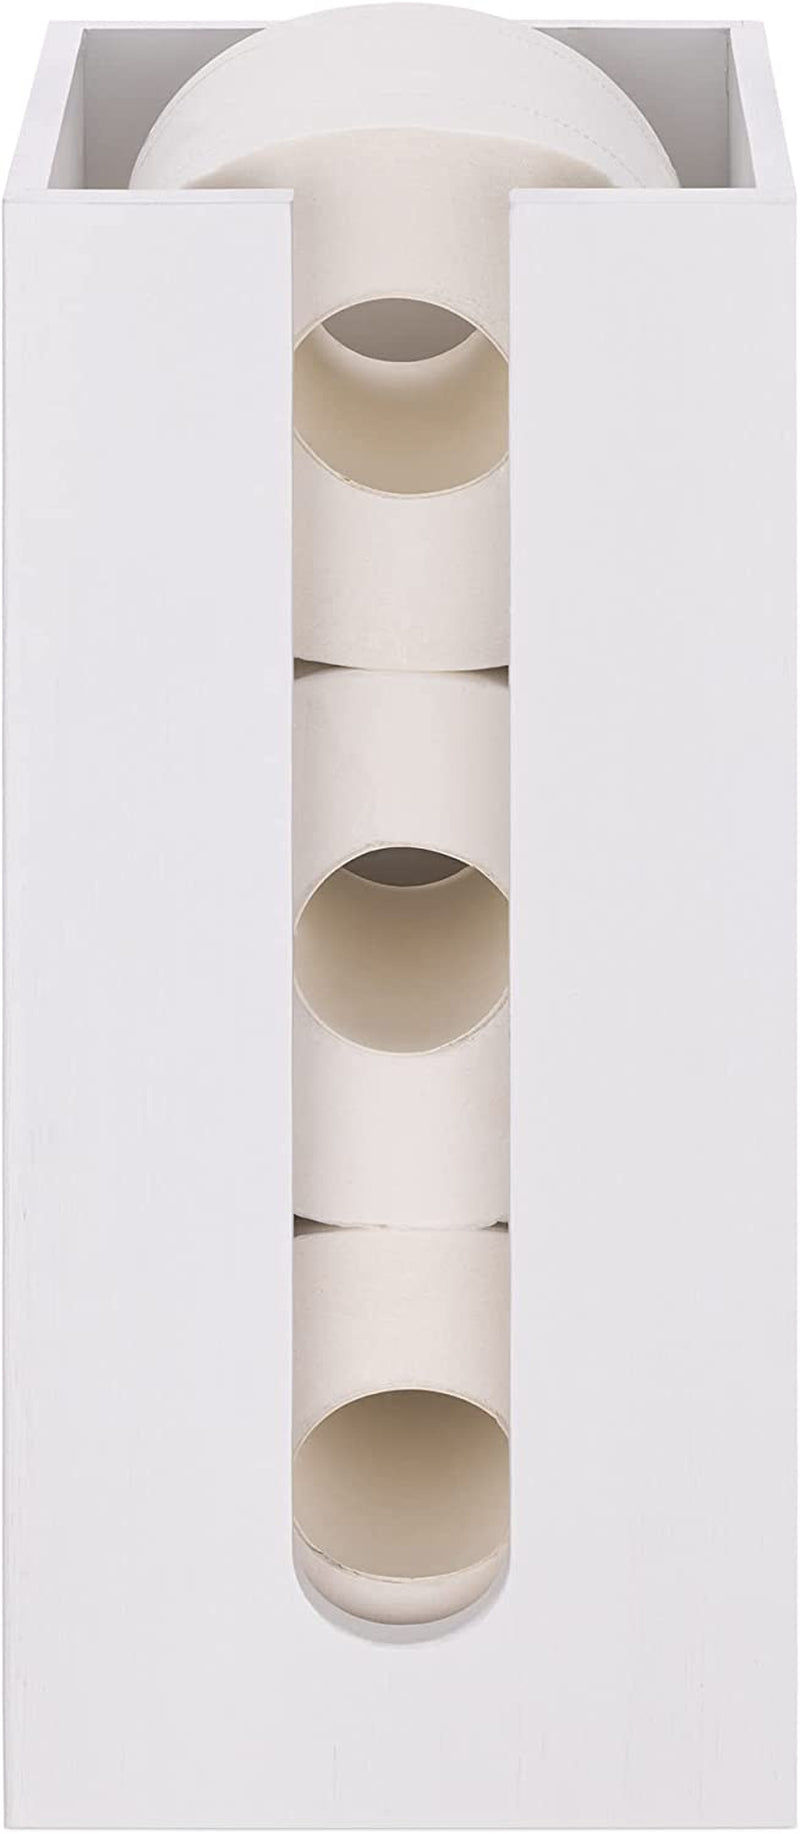 Navaris Bamboo Toilet Paper Storage - Narrow Free Standing Toilet Paper Holder Tower Organizer for Bathroom - Storage for 3 Toilet Rolls - White Home & Garden > Household Supplies > Storage & Organization Navaris   